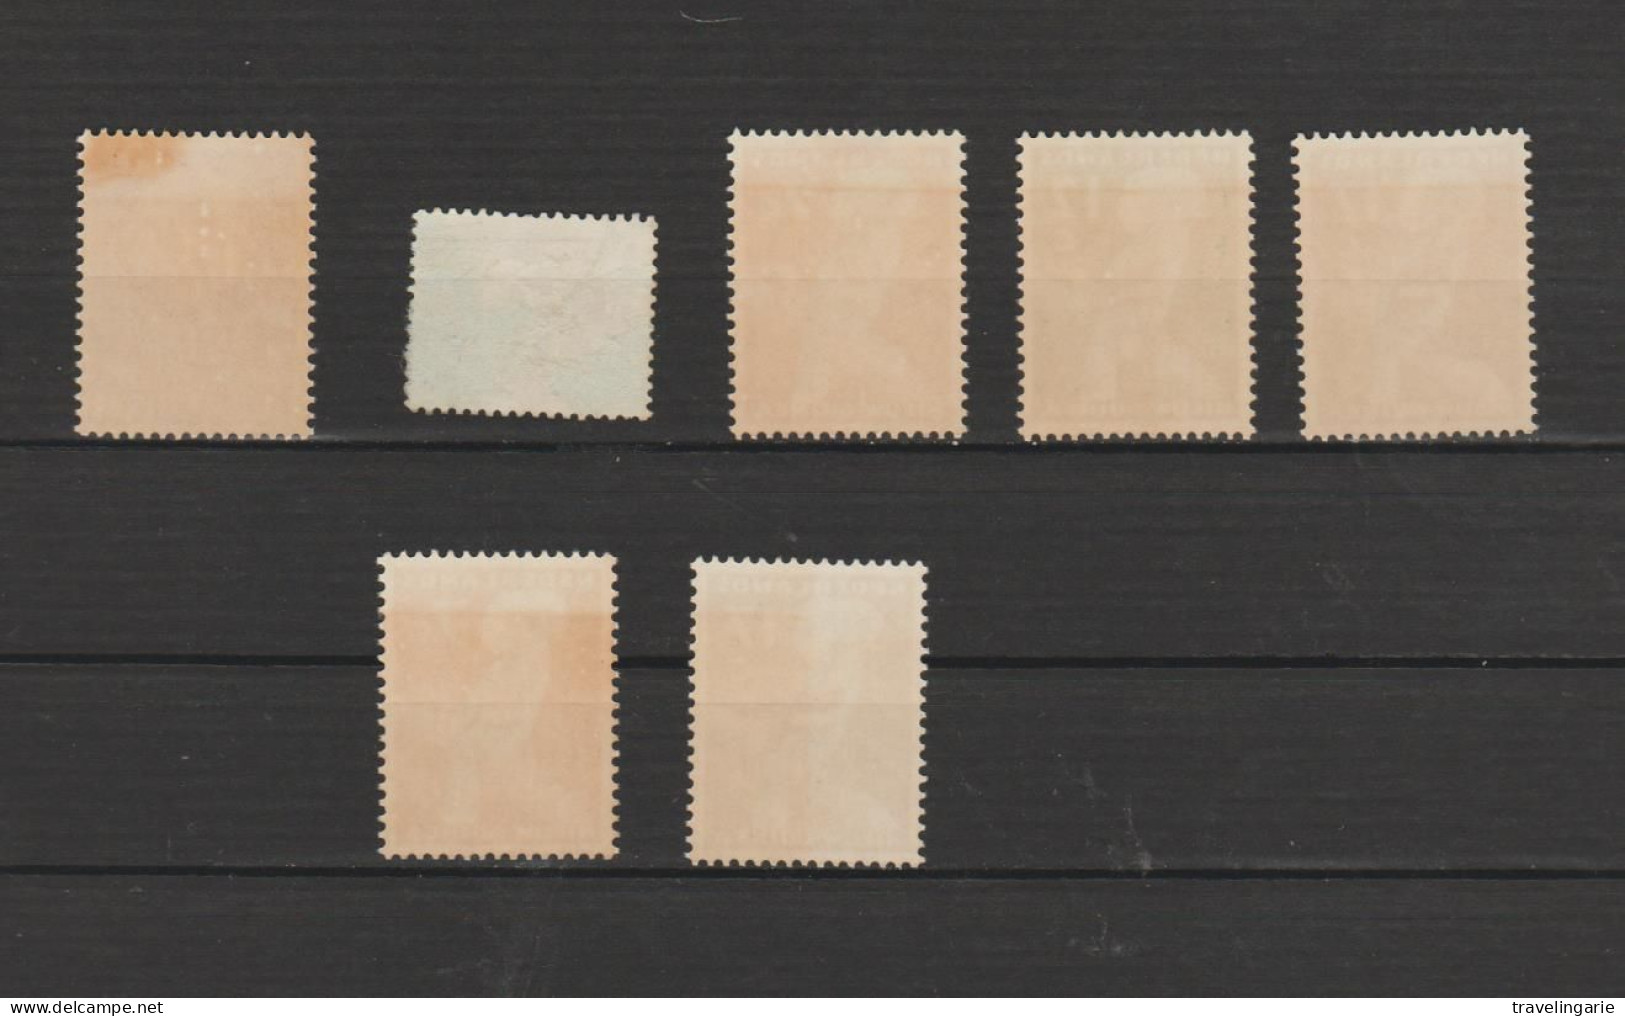 Nieuw-Guinea 1950-1960 Selection Of Stamps MNH/used - Niederländisch-Neuguinea